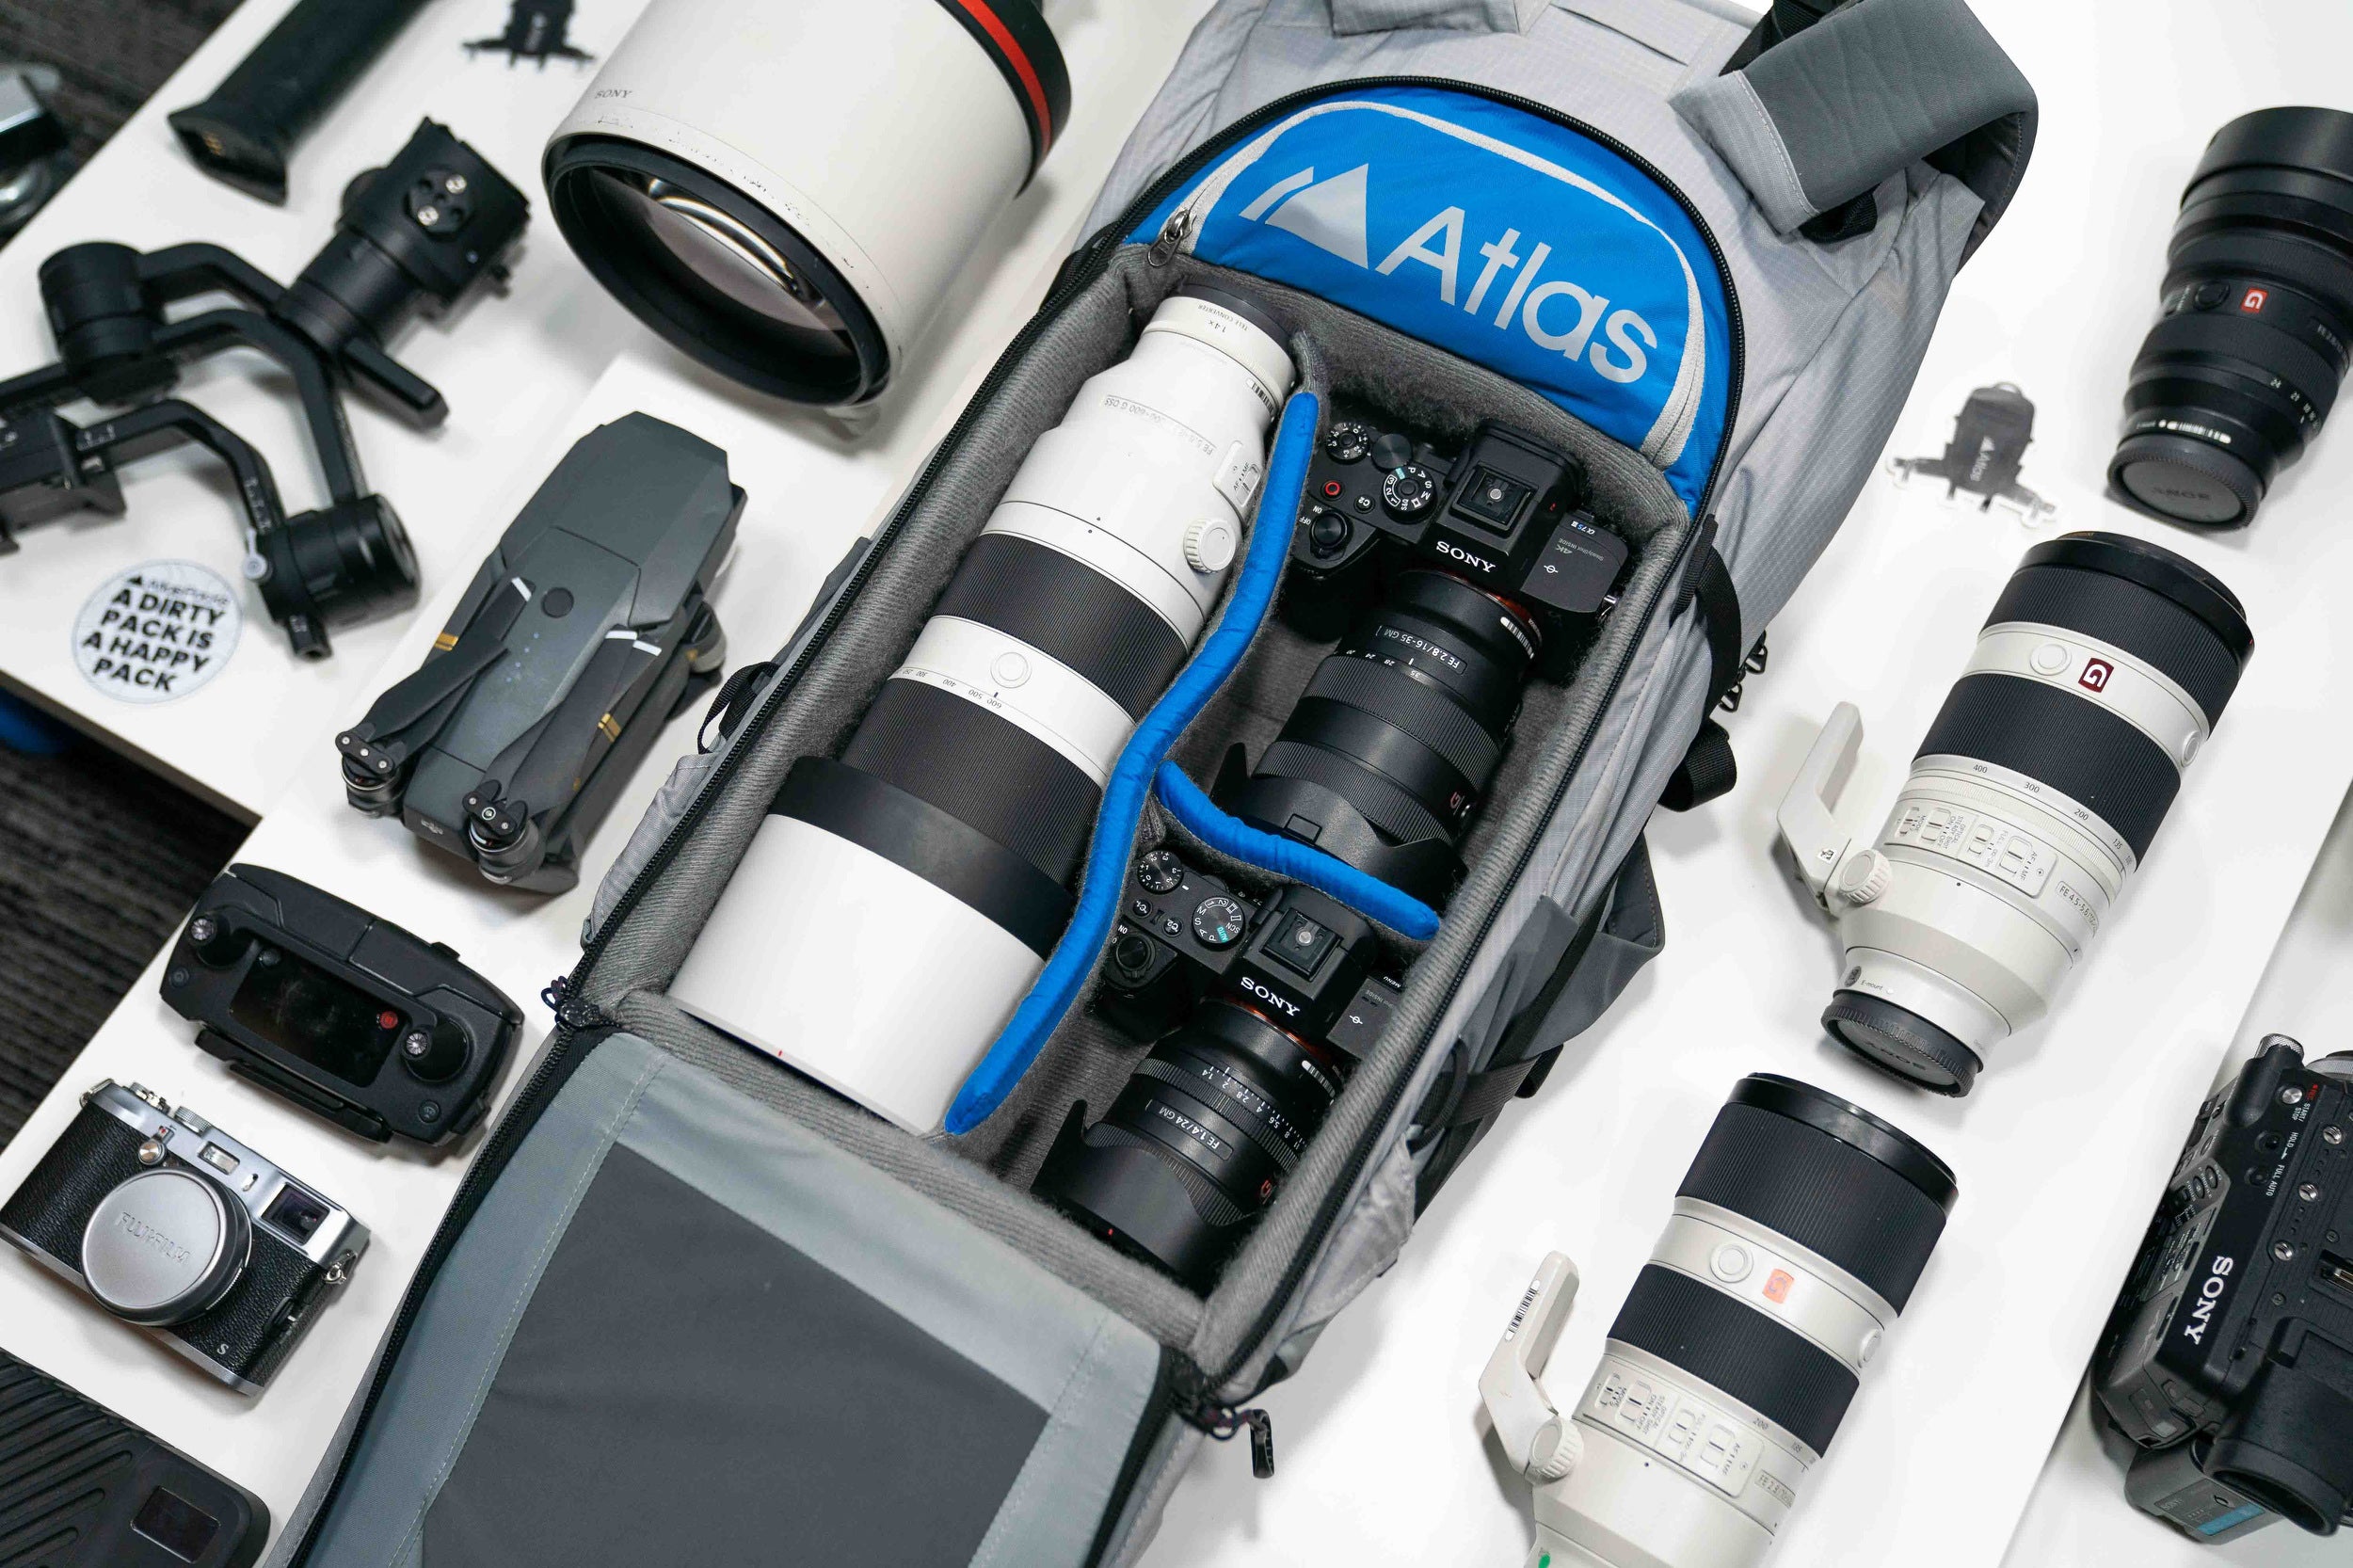 Atlas Athlete Pack - See how camera gear fits inside – AtlasPacks